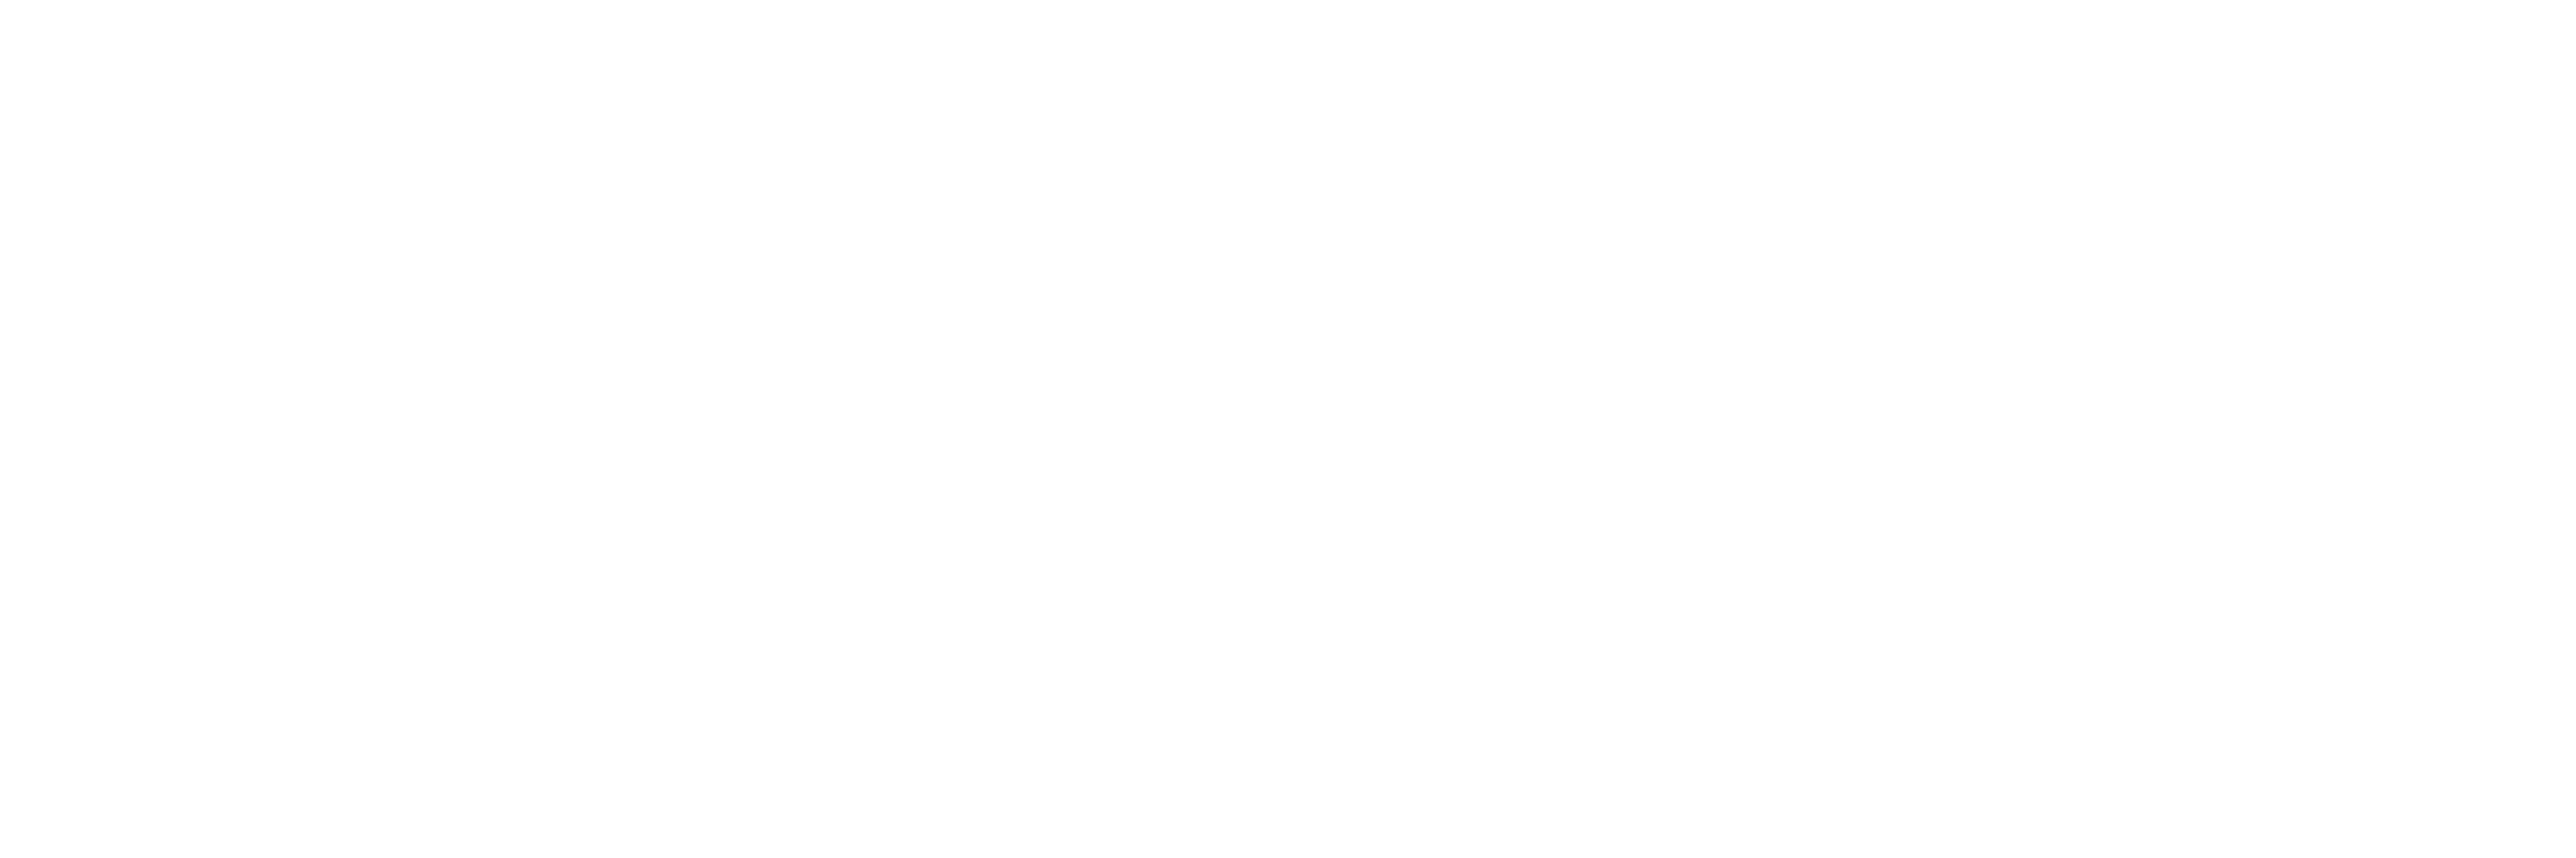 Make-A-Wish Central and Western North Carolina Logo